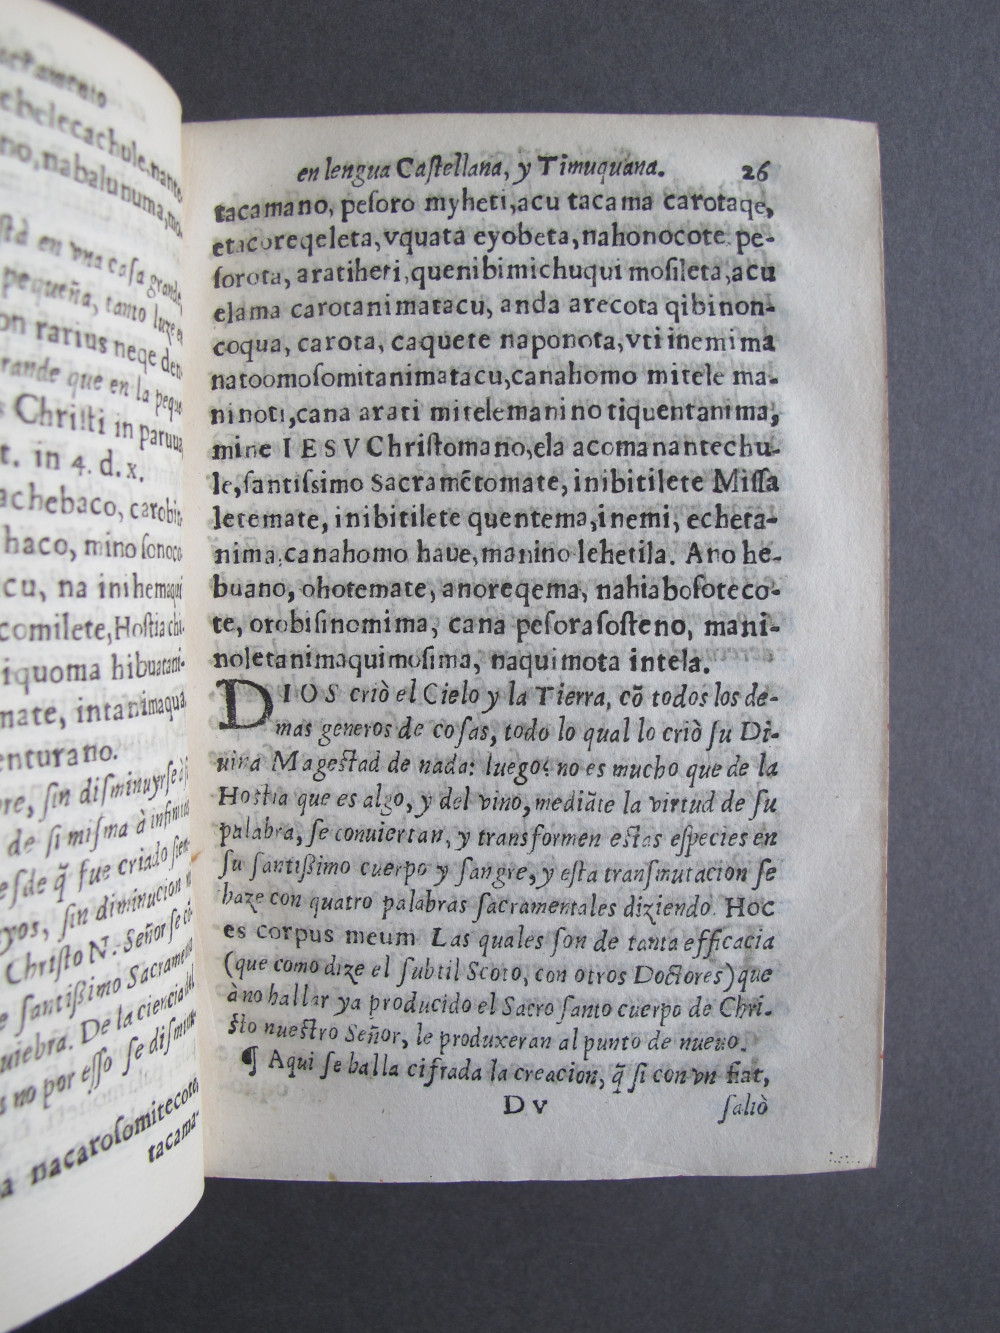 Folio D5 recto